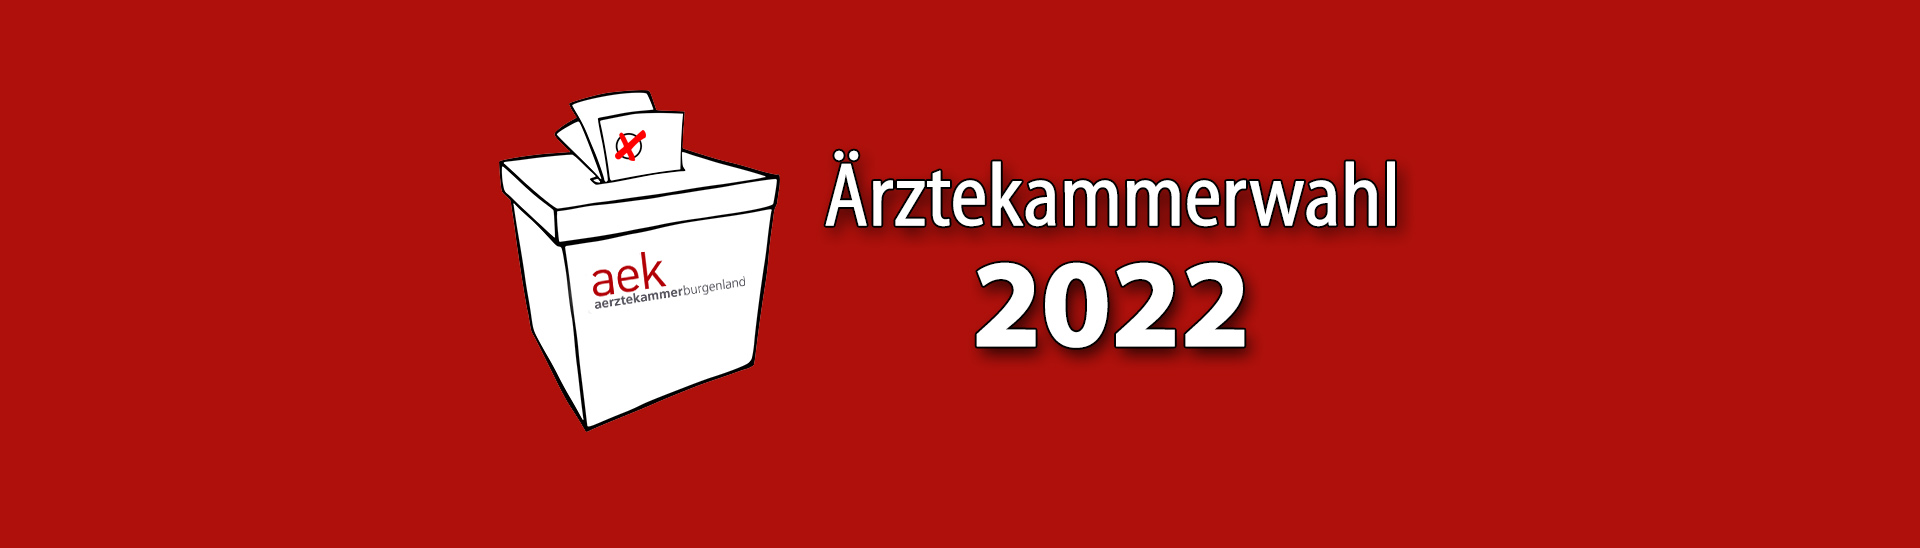 Titelbild Wahl 2022